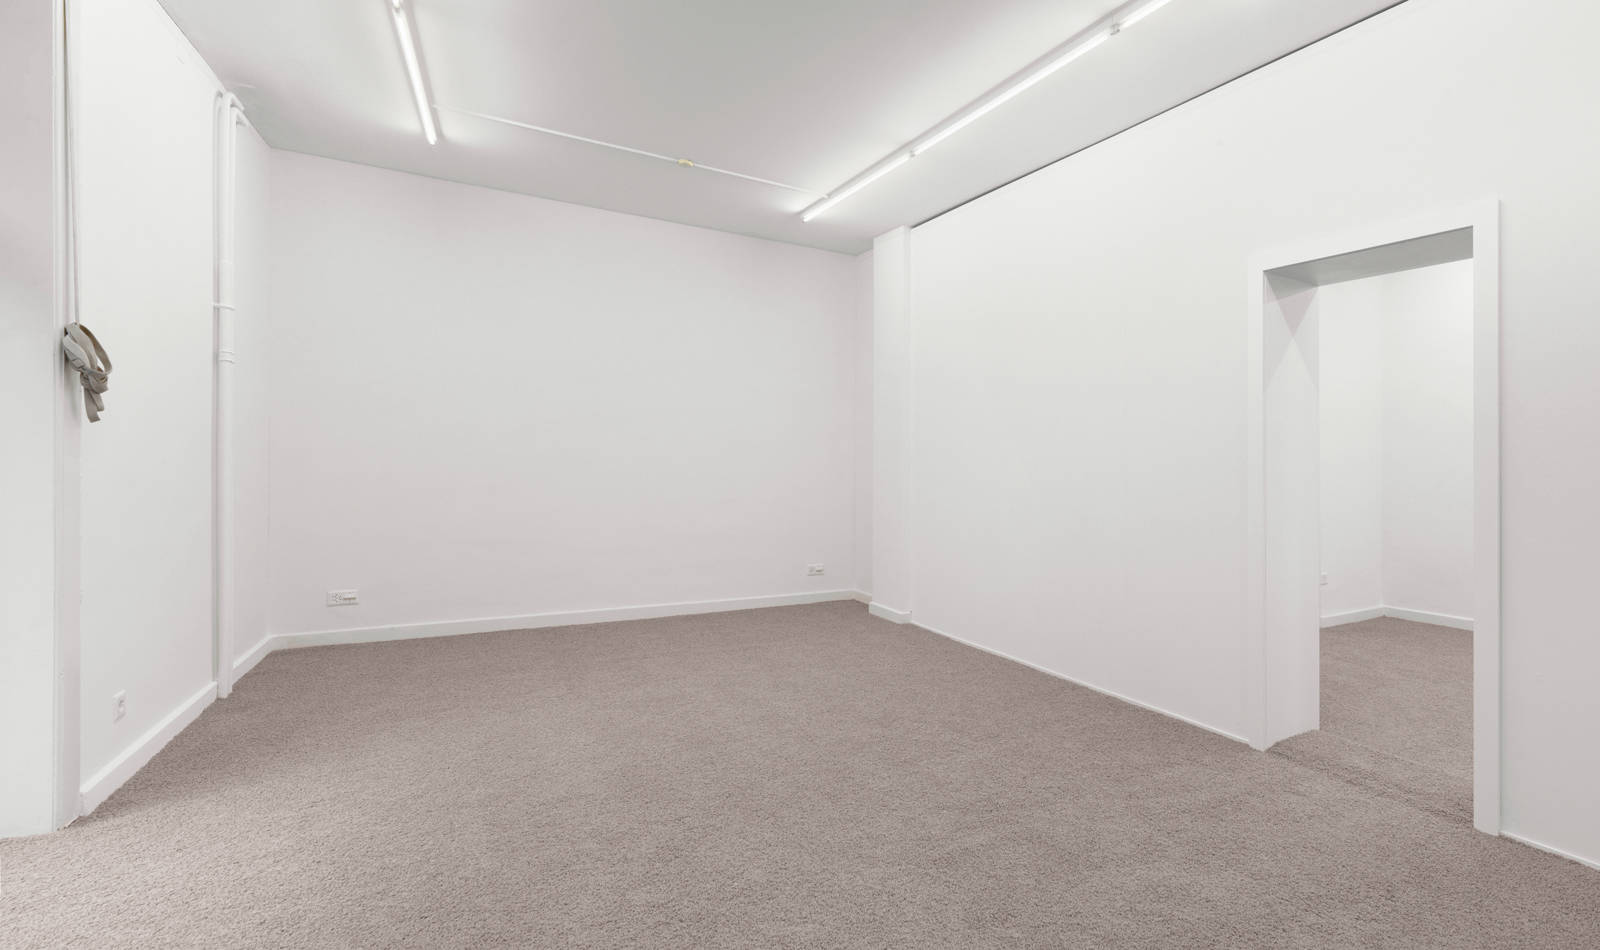 Annaïk Lou Pitteloud / "Monologue for an Interior", exhibition view, Galerie Barbara Seiler, Zürich / 2015